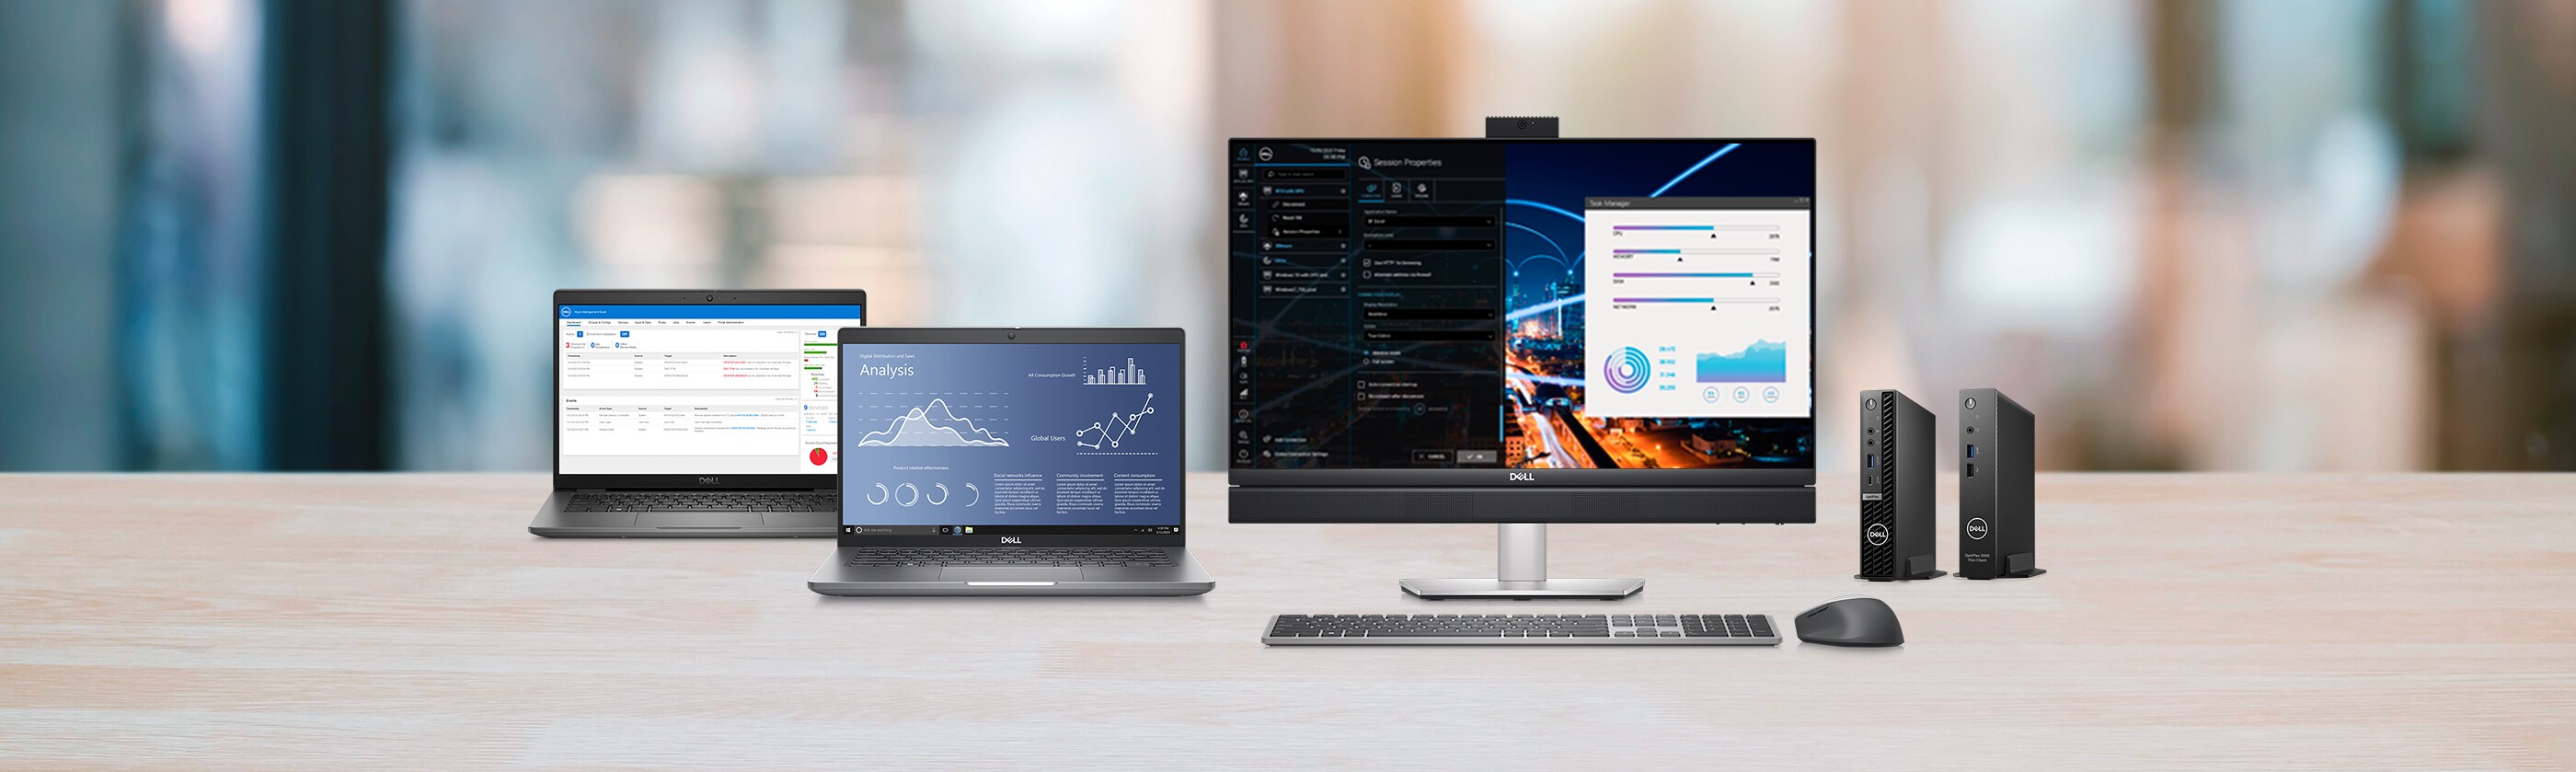 Windows® 10 IoT Enterprise：柔軟性に優れ、Dell製品向けに最適化されたソフトウェアの選択肢